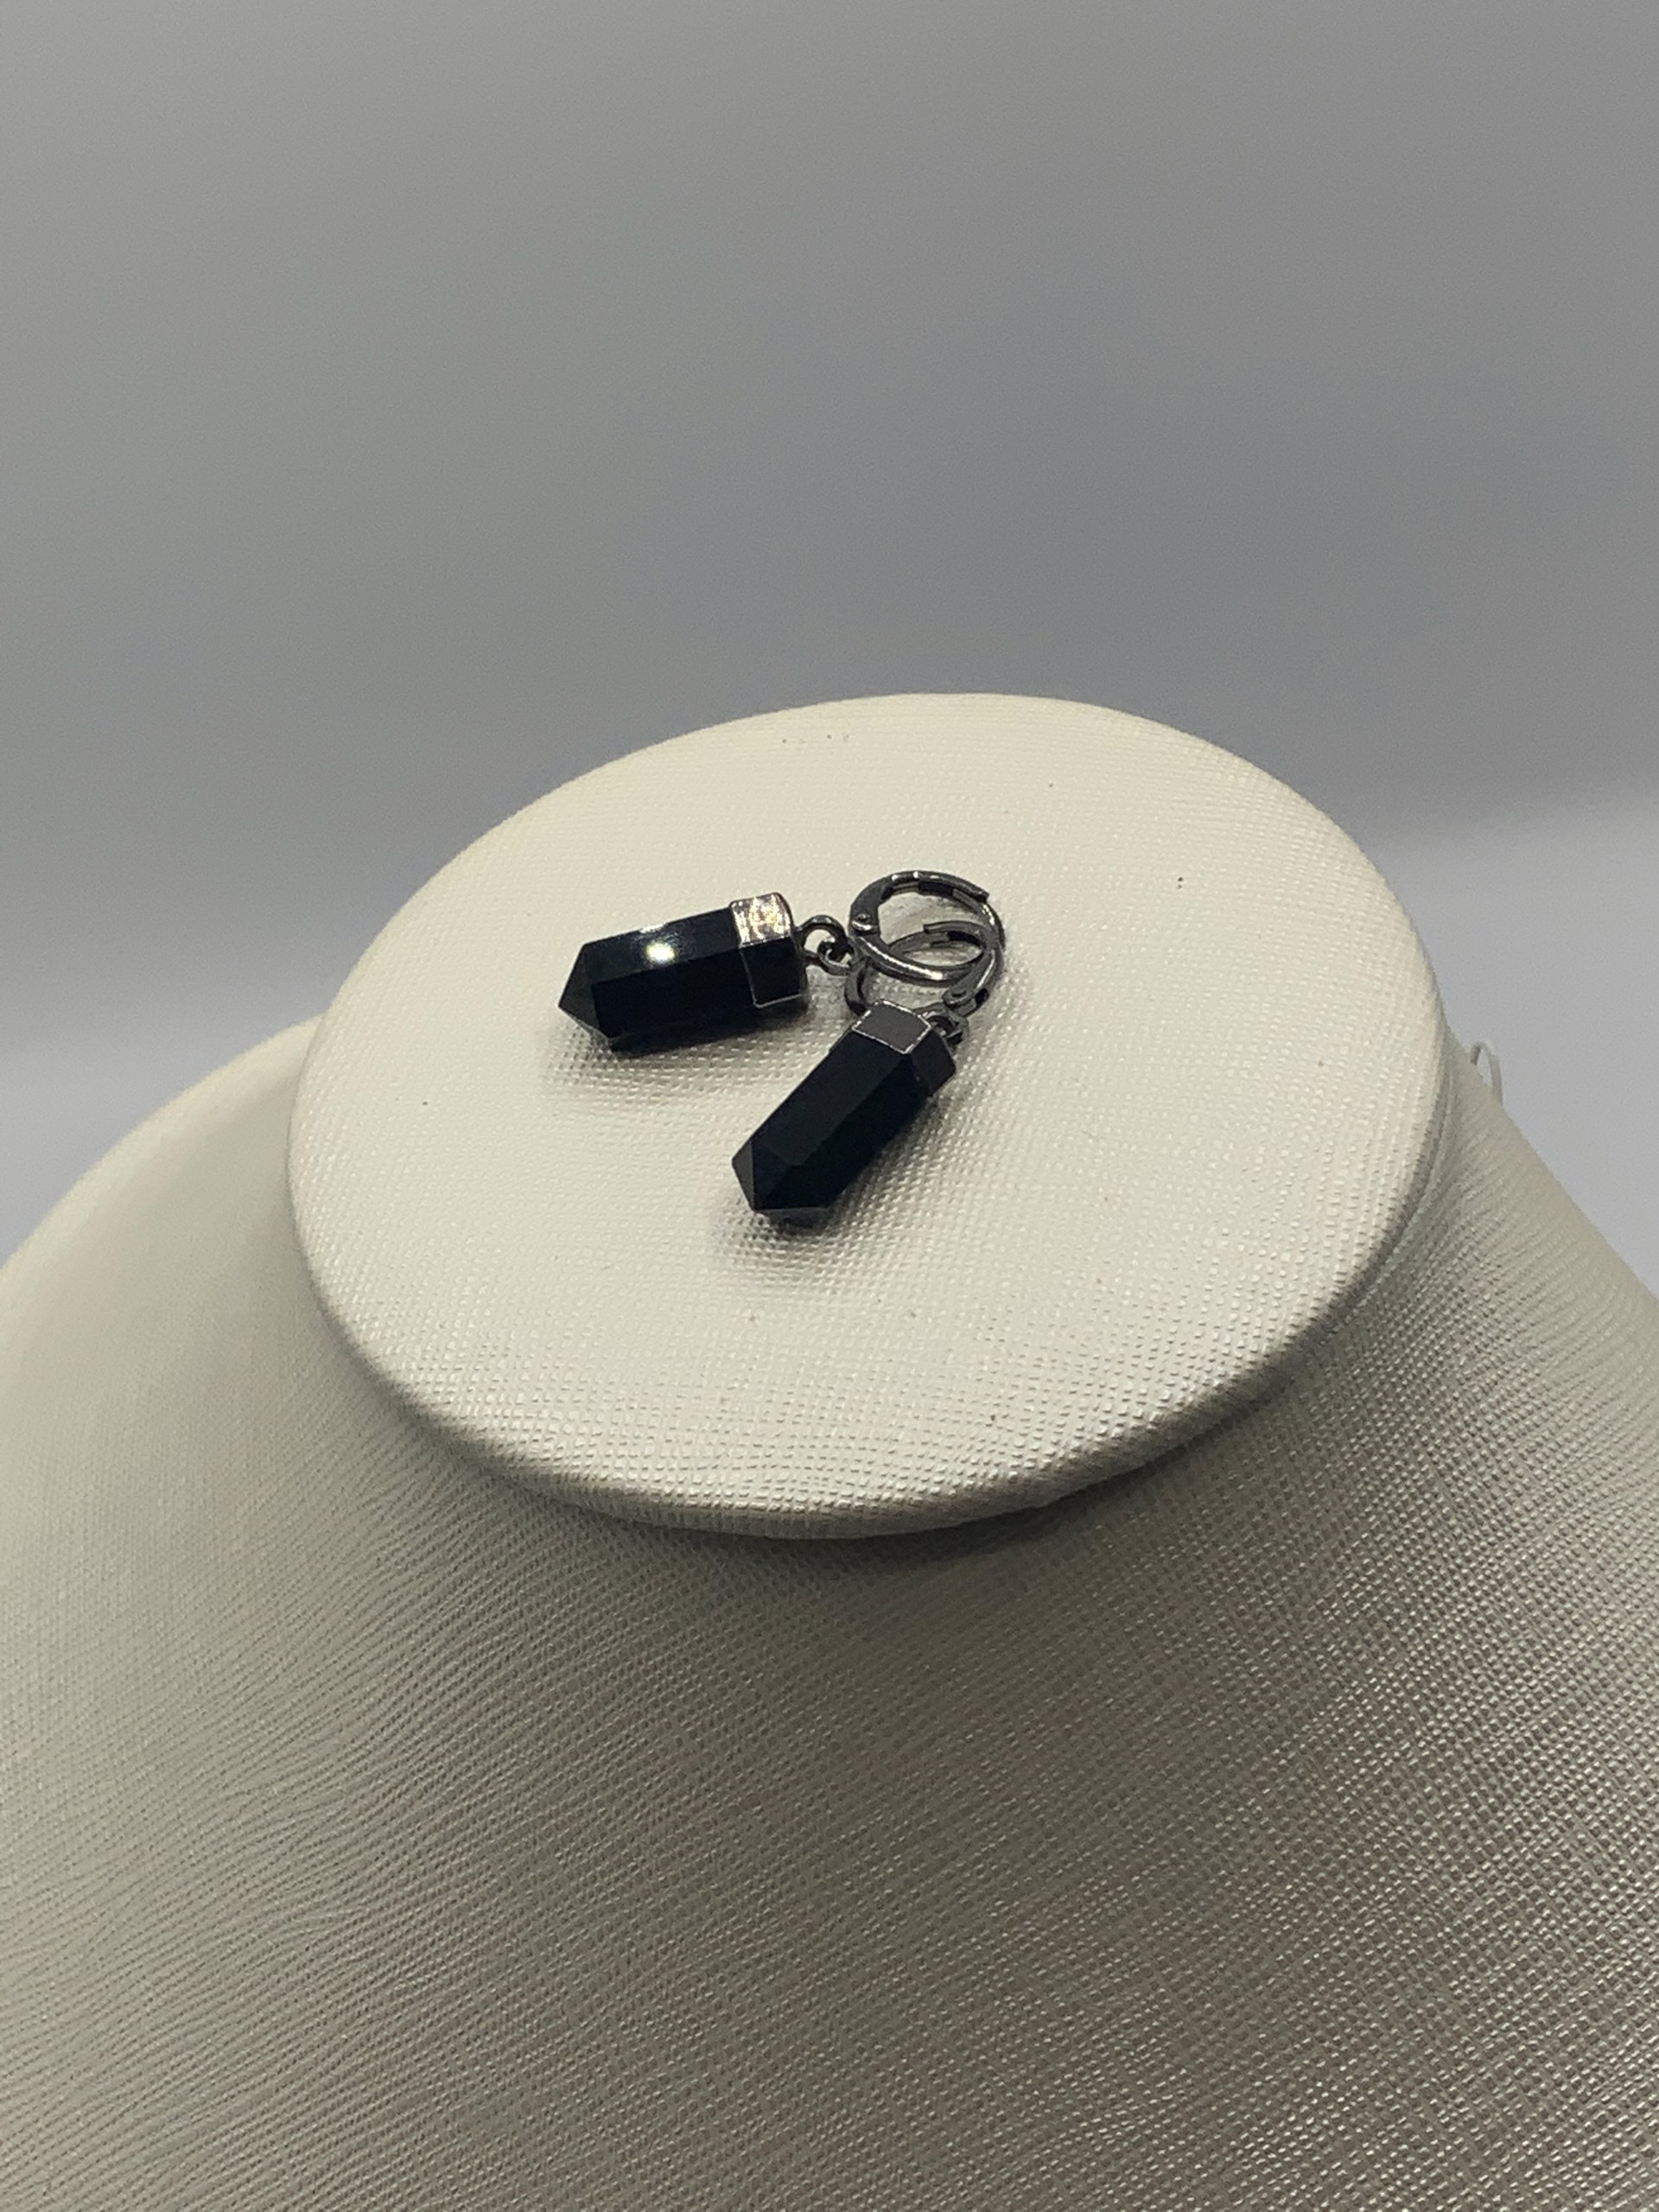 Single Point Drop on small hoop-Obsidian by M&Co.